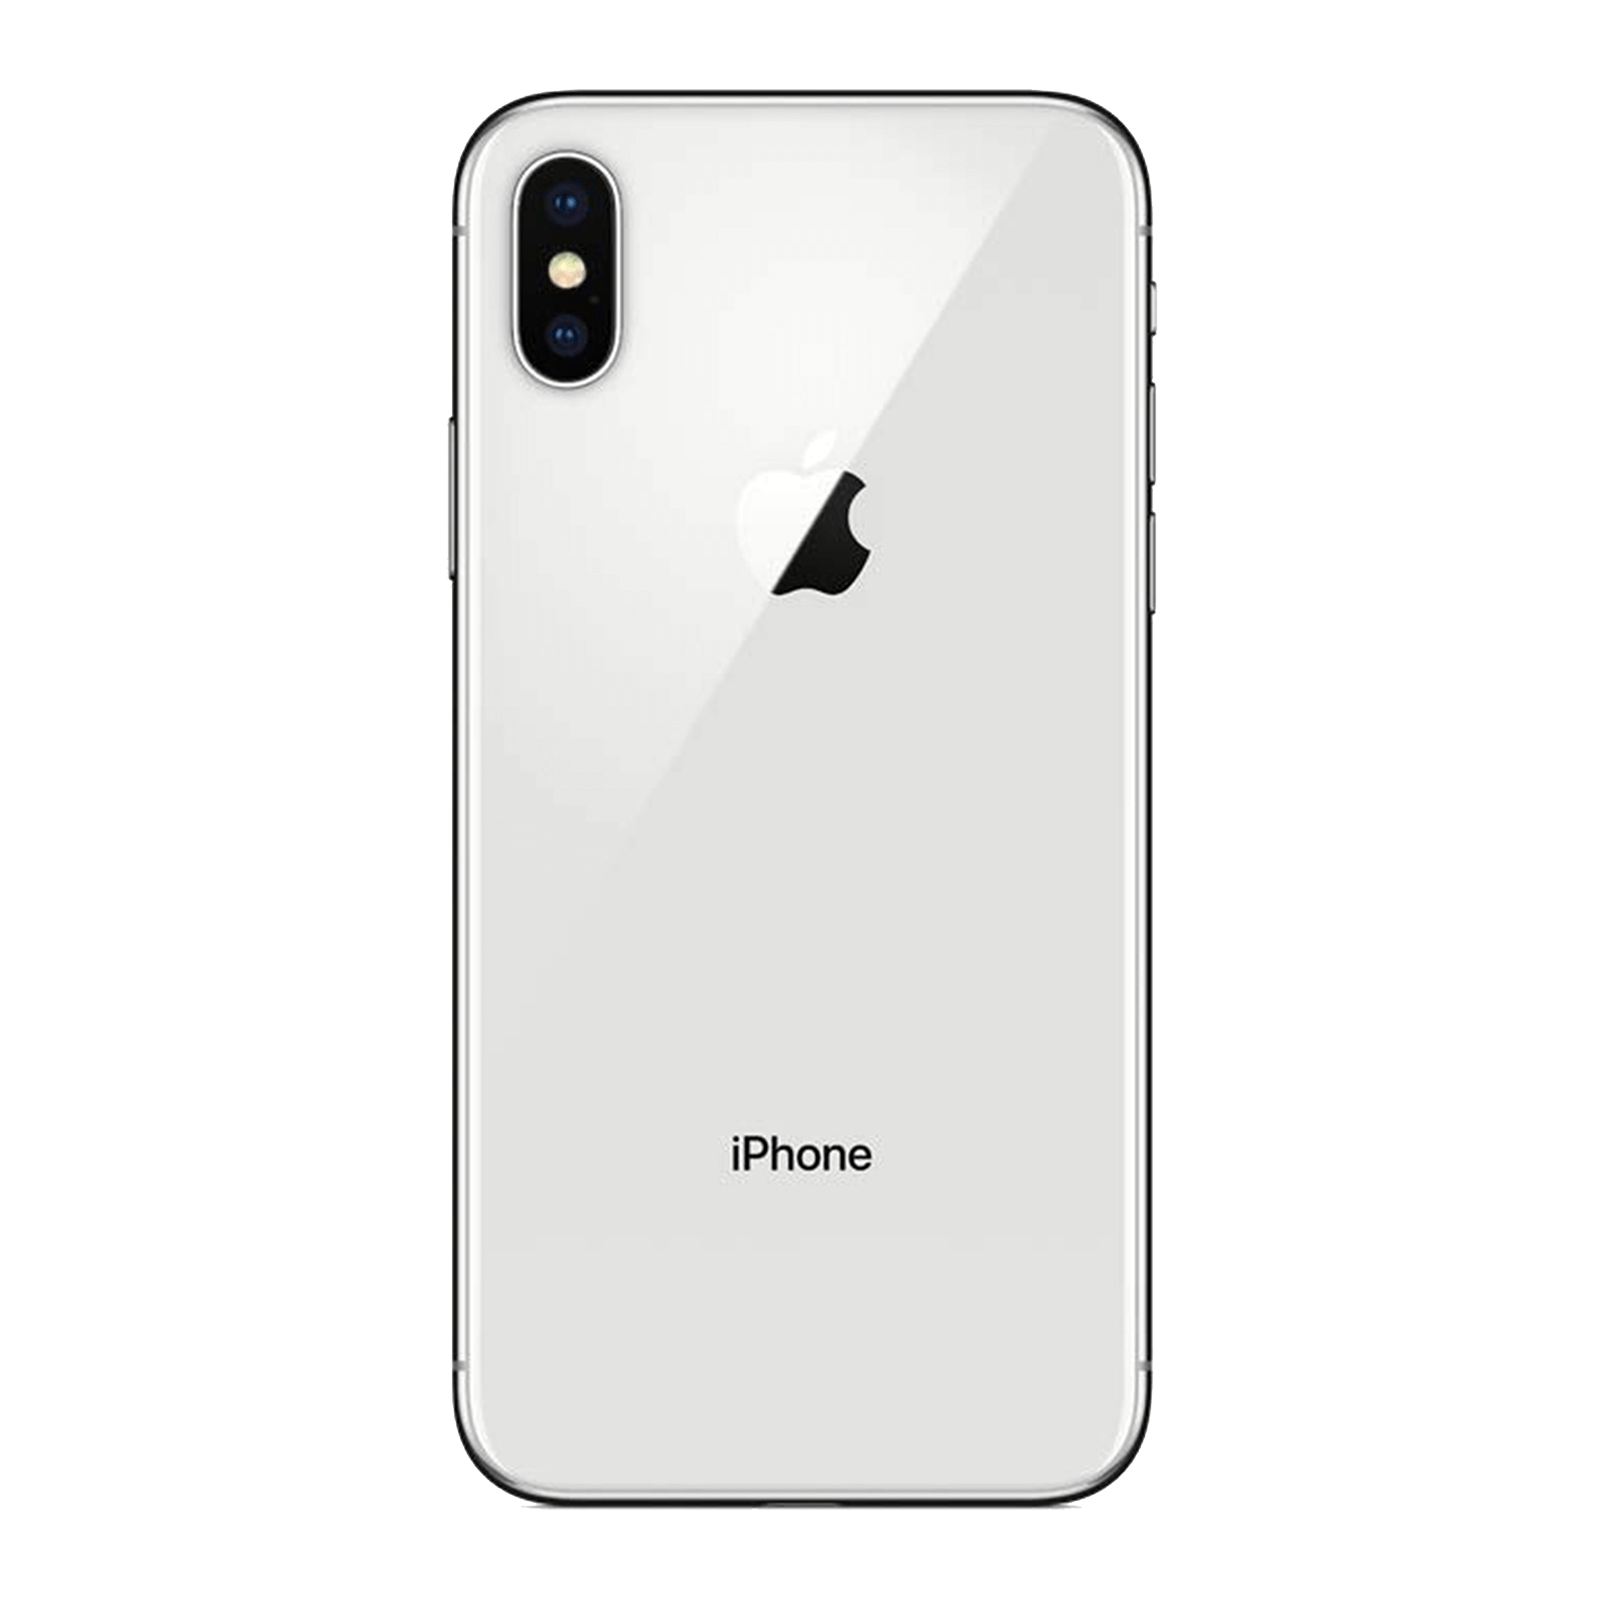 Apple iPhone X 256GB Silver Pristine - Unlocked